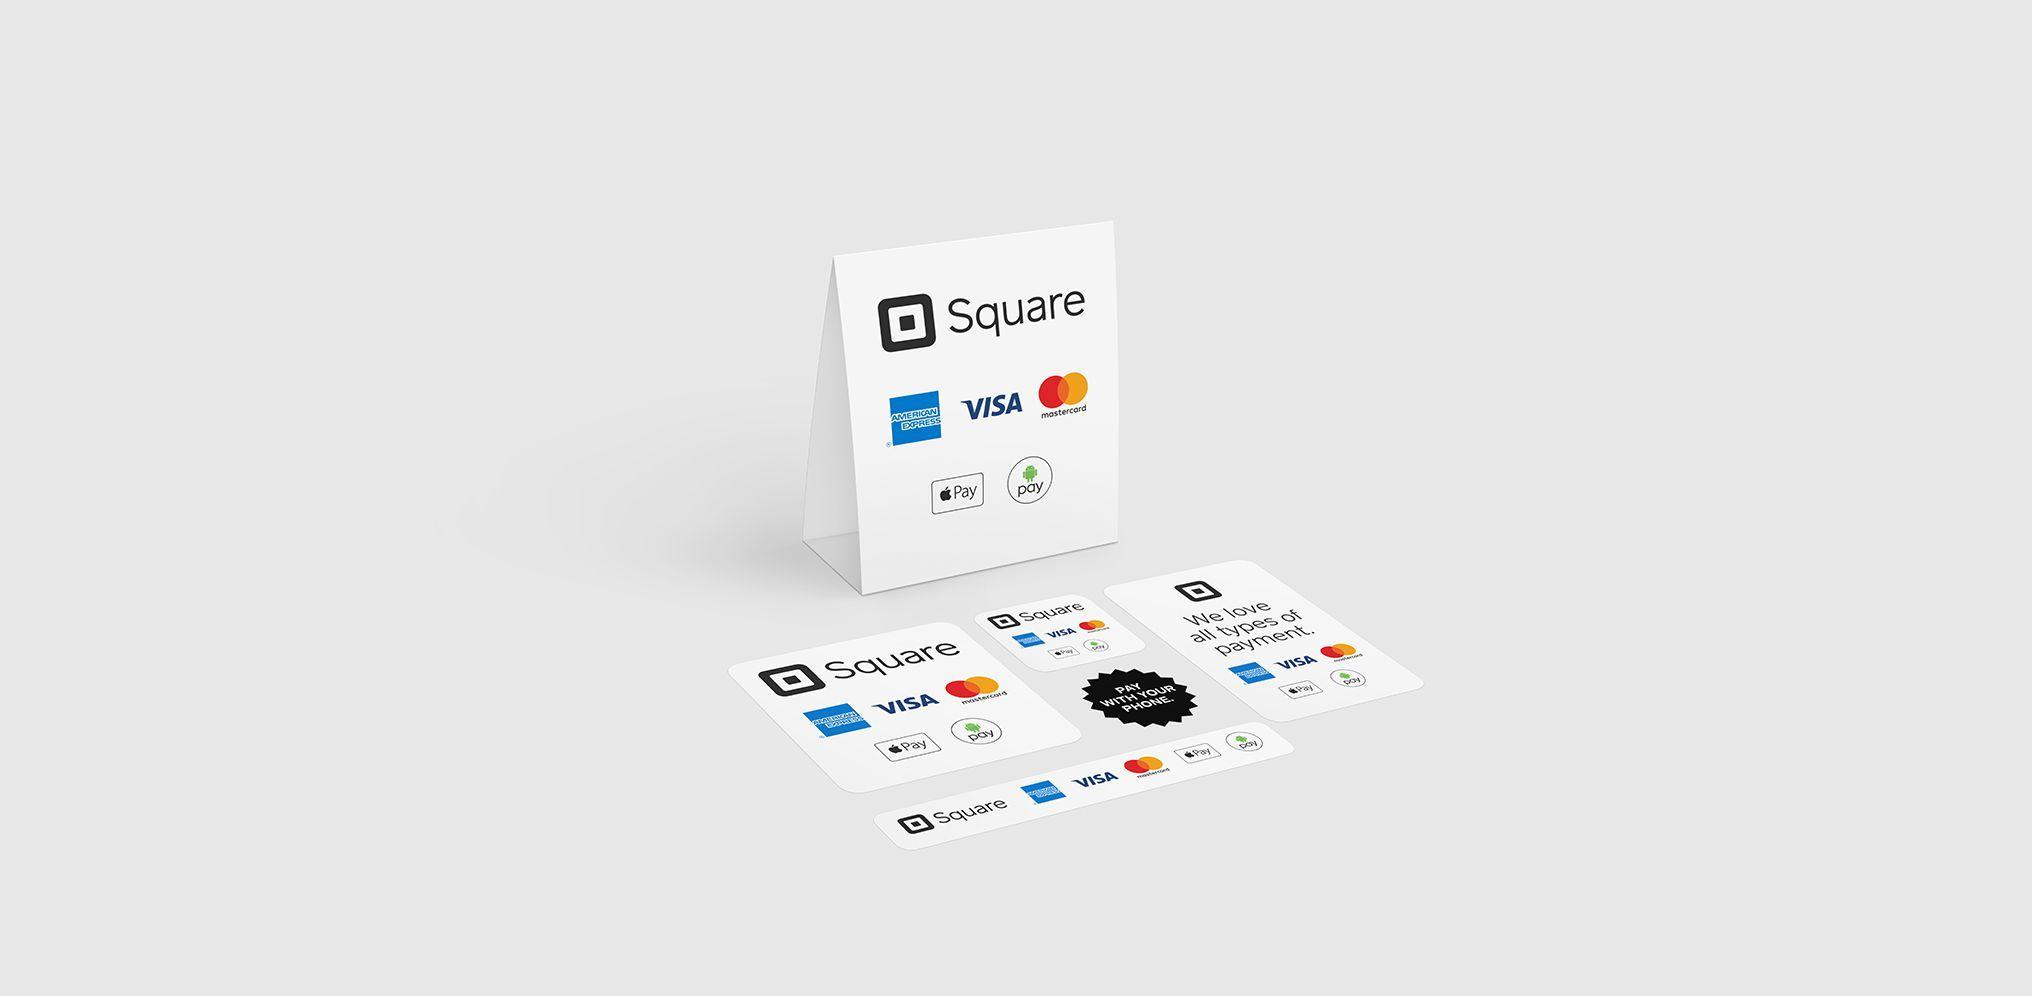 Square Credit Card Logo - Credit Card Marketing Kit